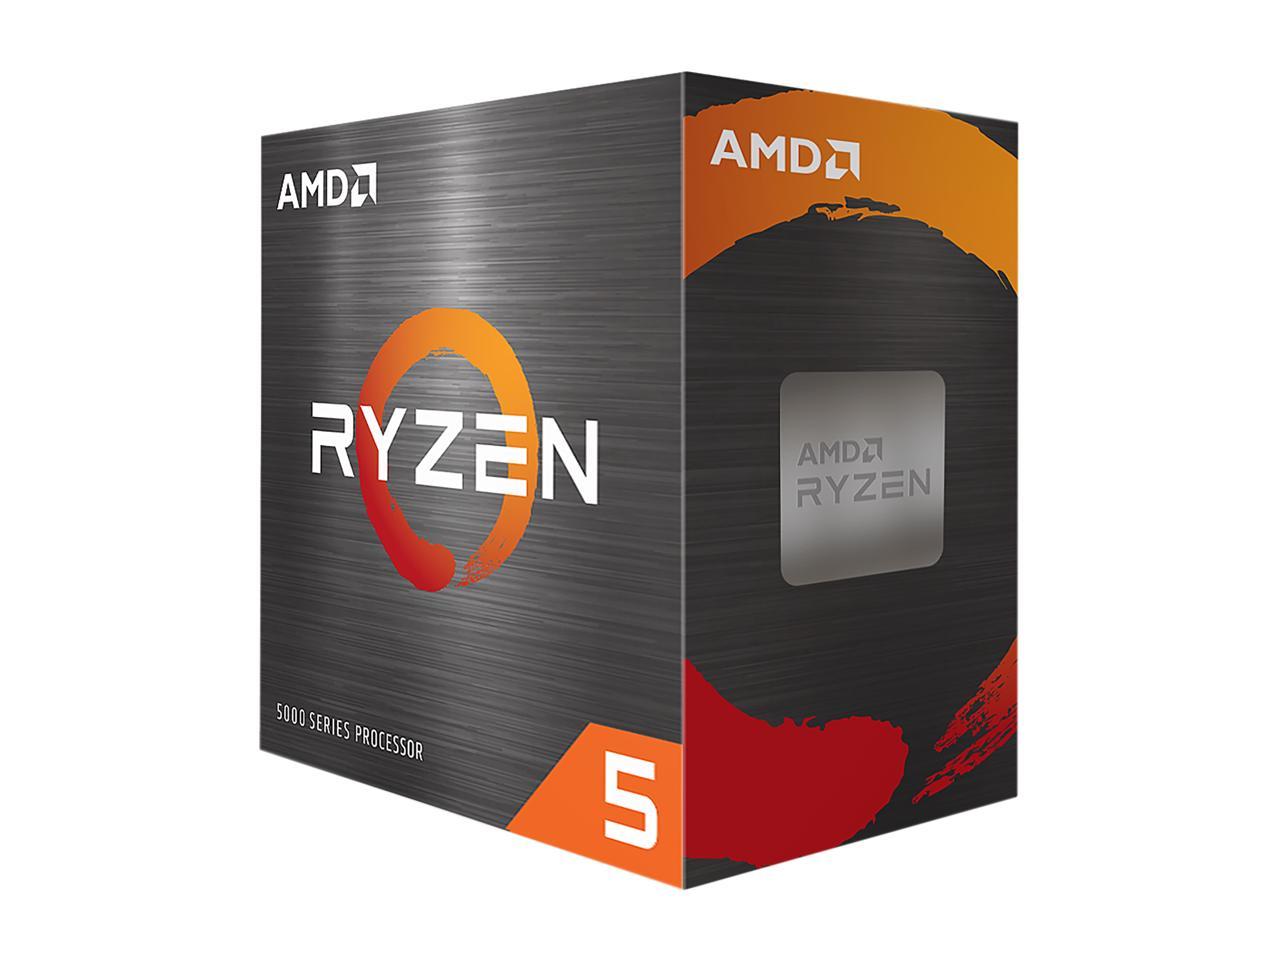 AMD Ryzen 5 5500 6-Core 12-Thread Desktop Processor w/ Wraith Stealth Cooler $94